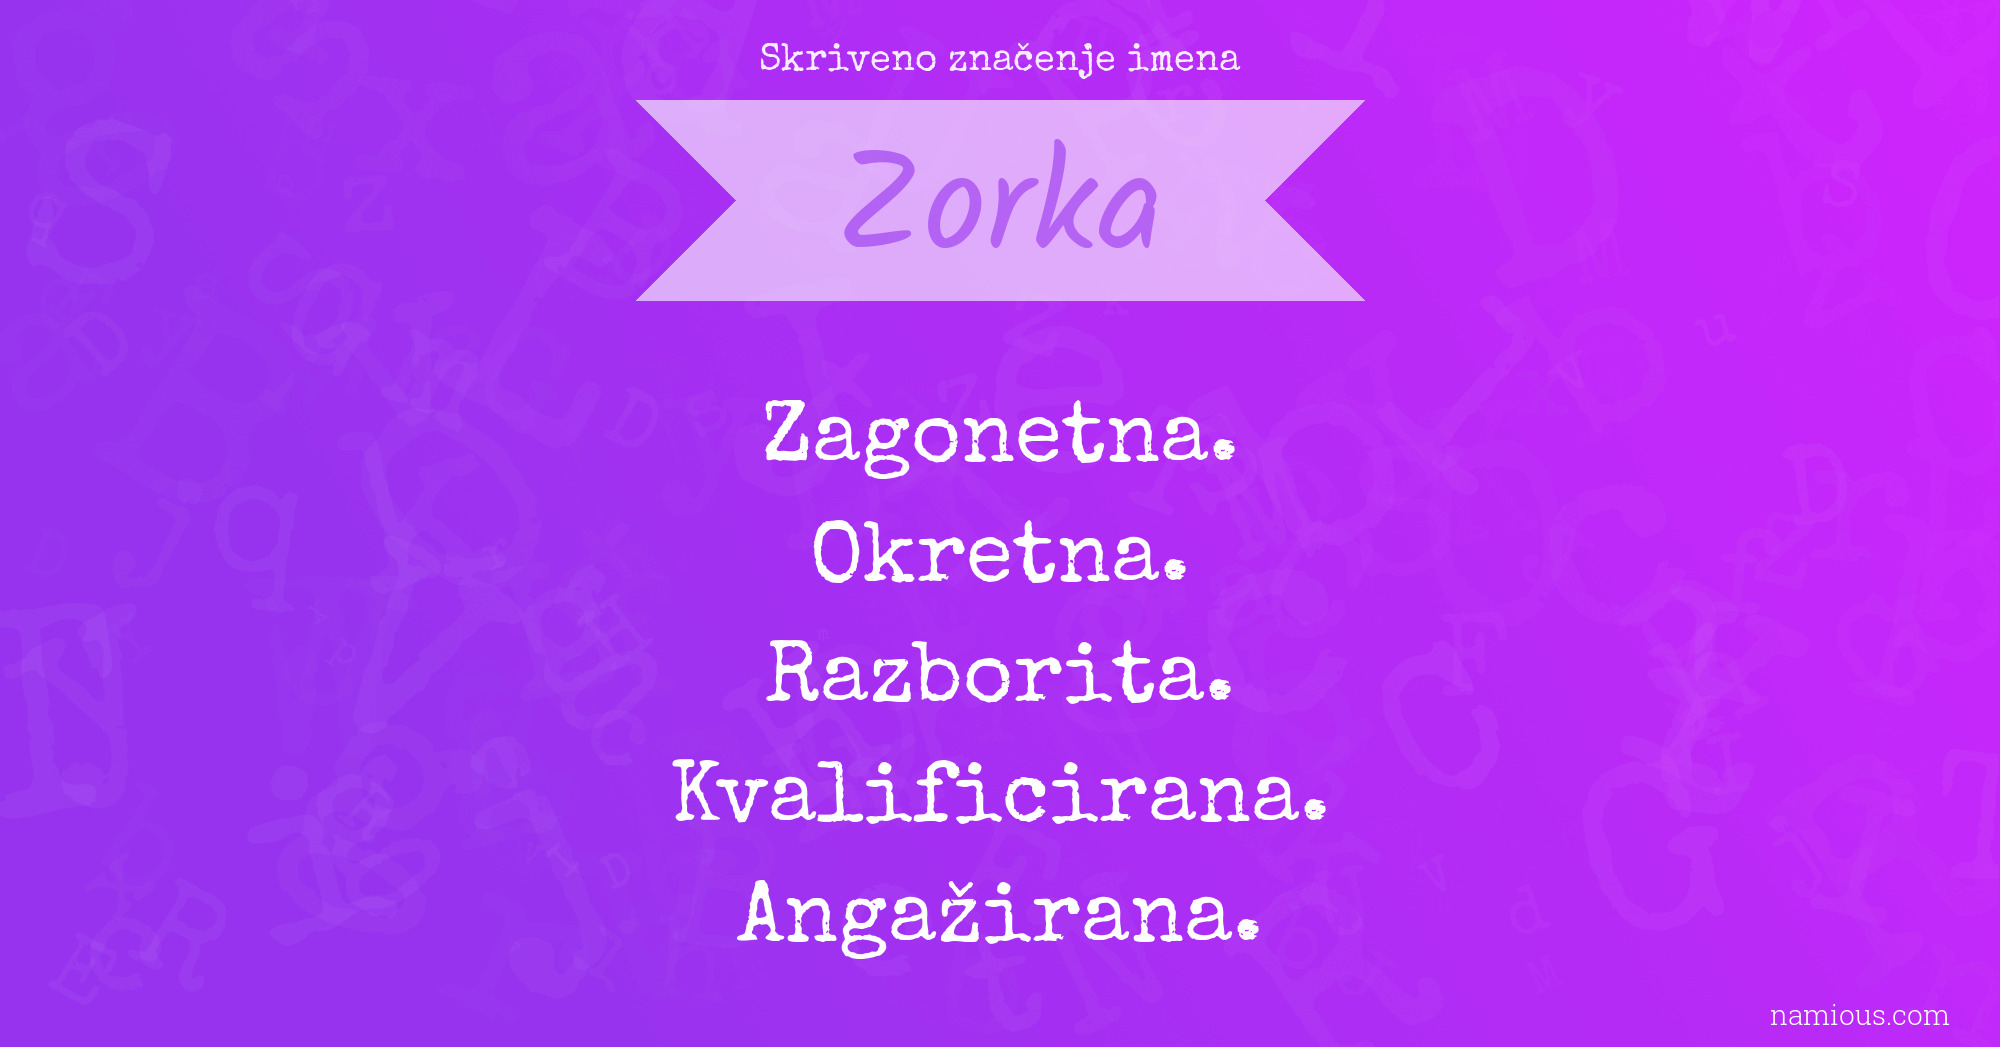 Skriveno značenje imena Zorka